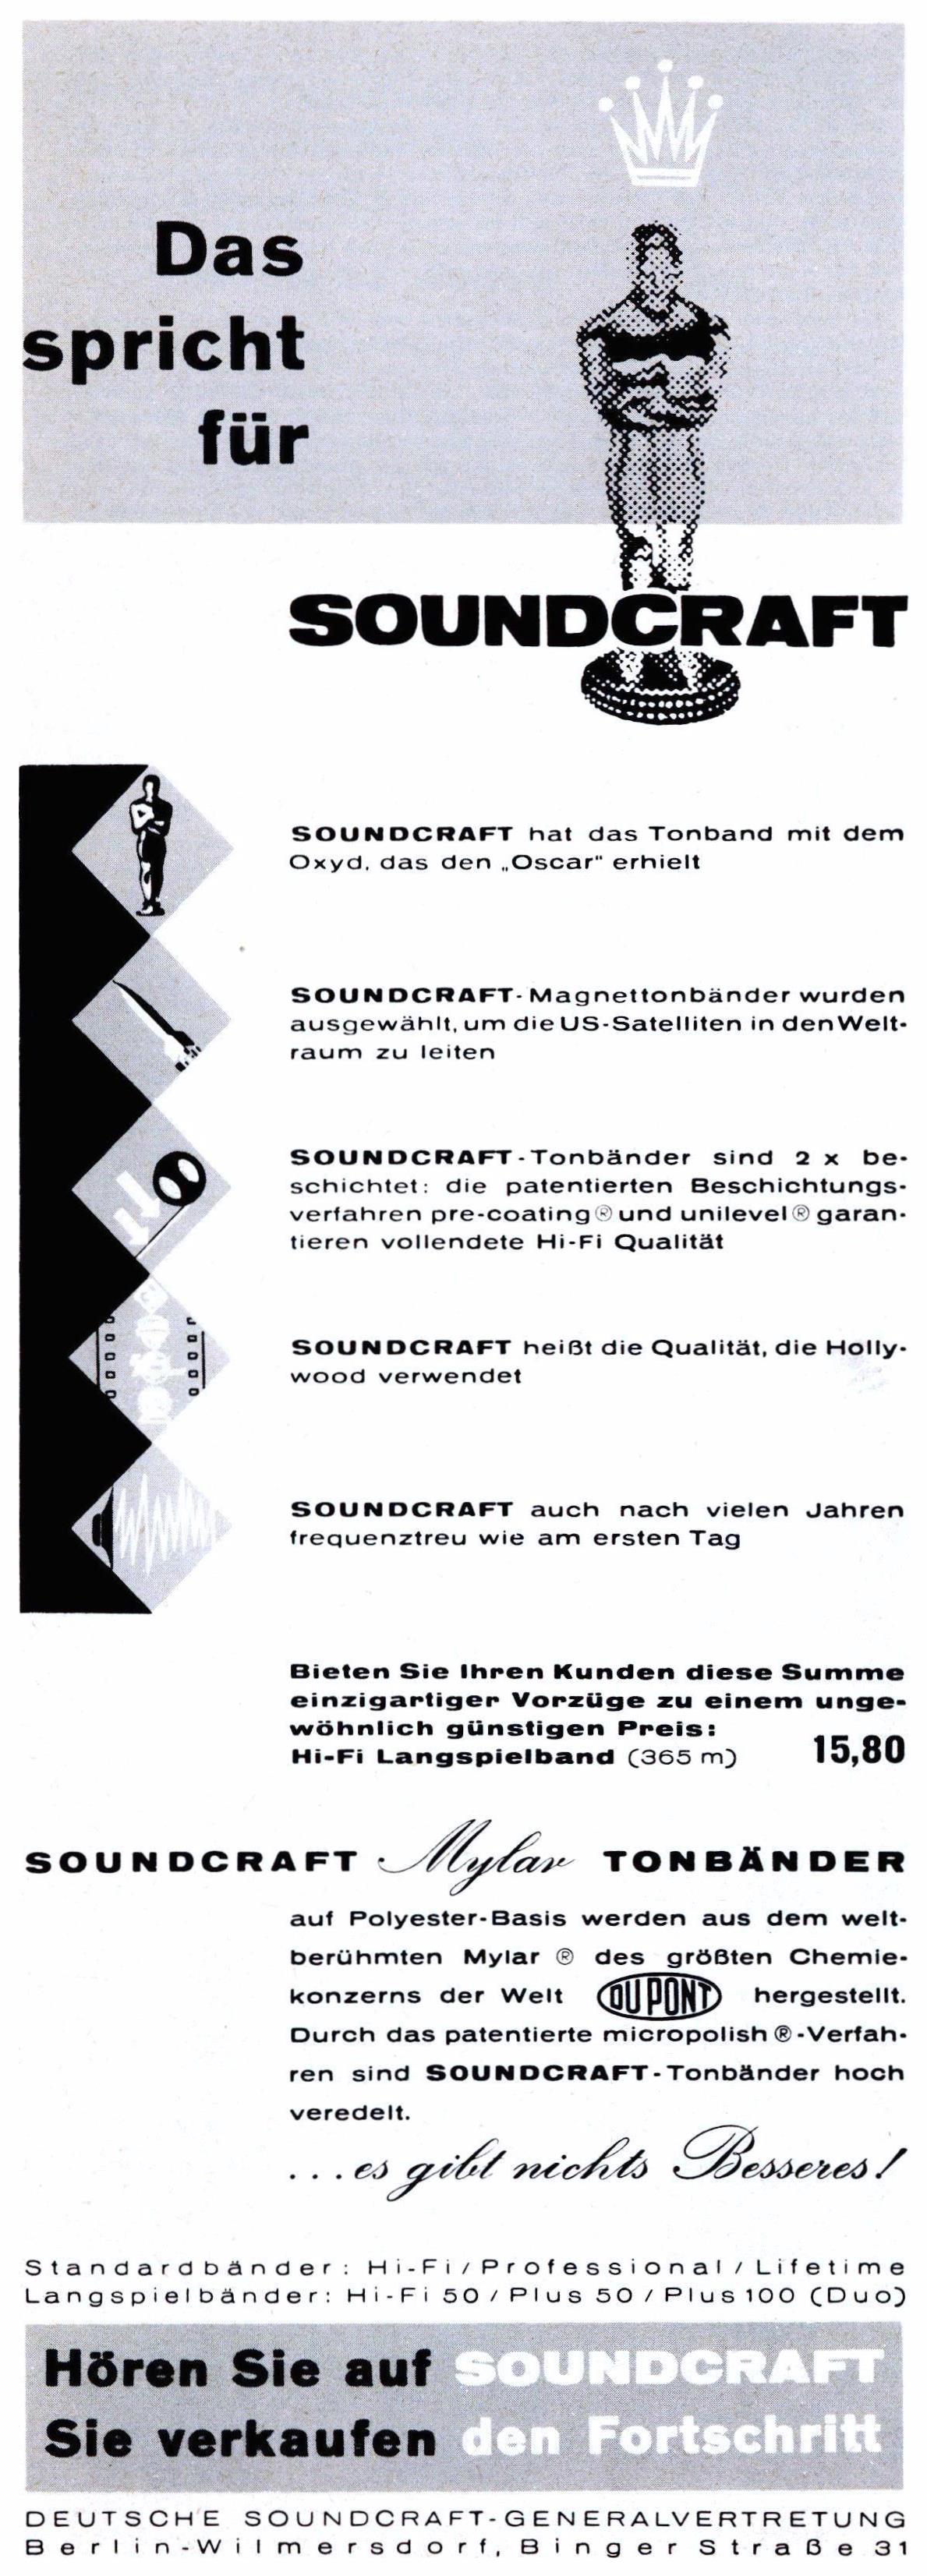 Soundcraft 1959 1.jpg